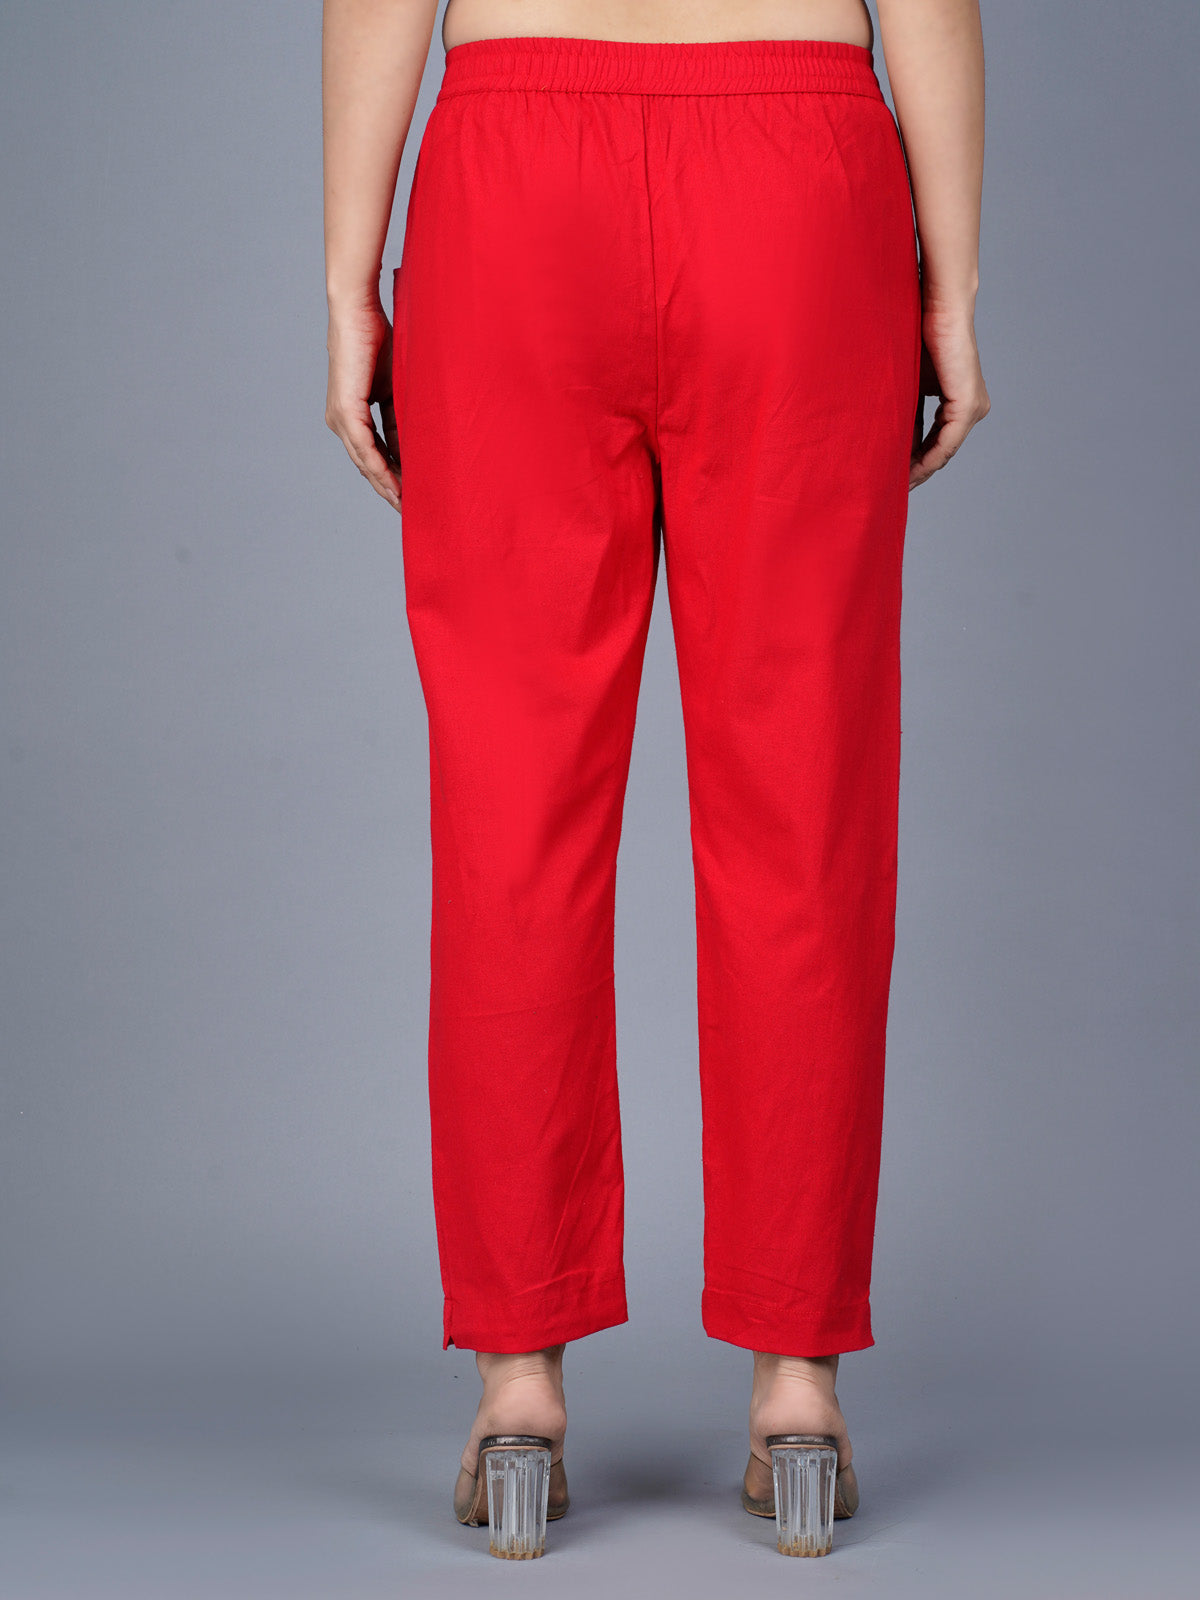 Women's Red Regular Fit Elastic Cotton Trouser